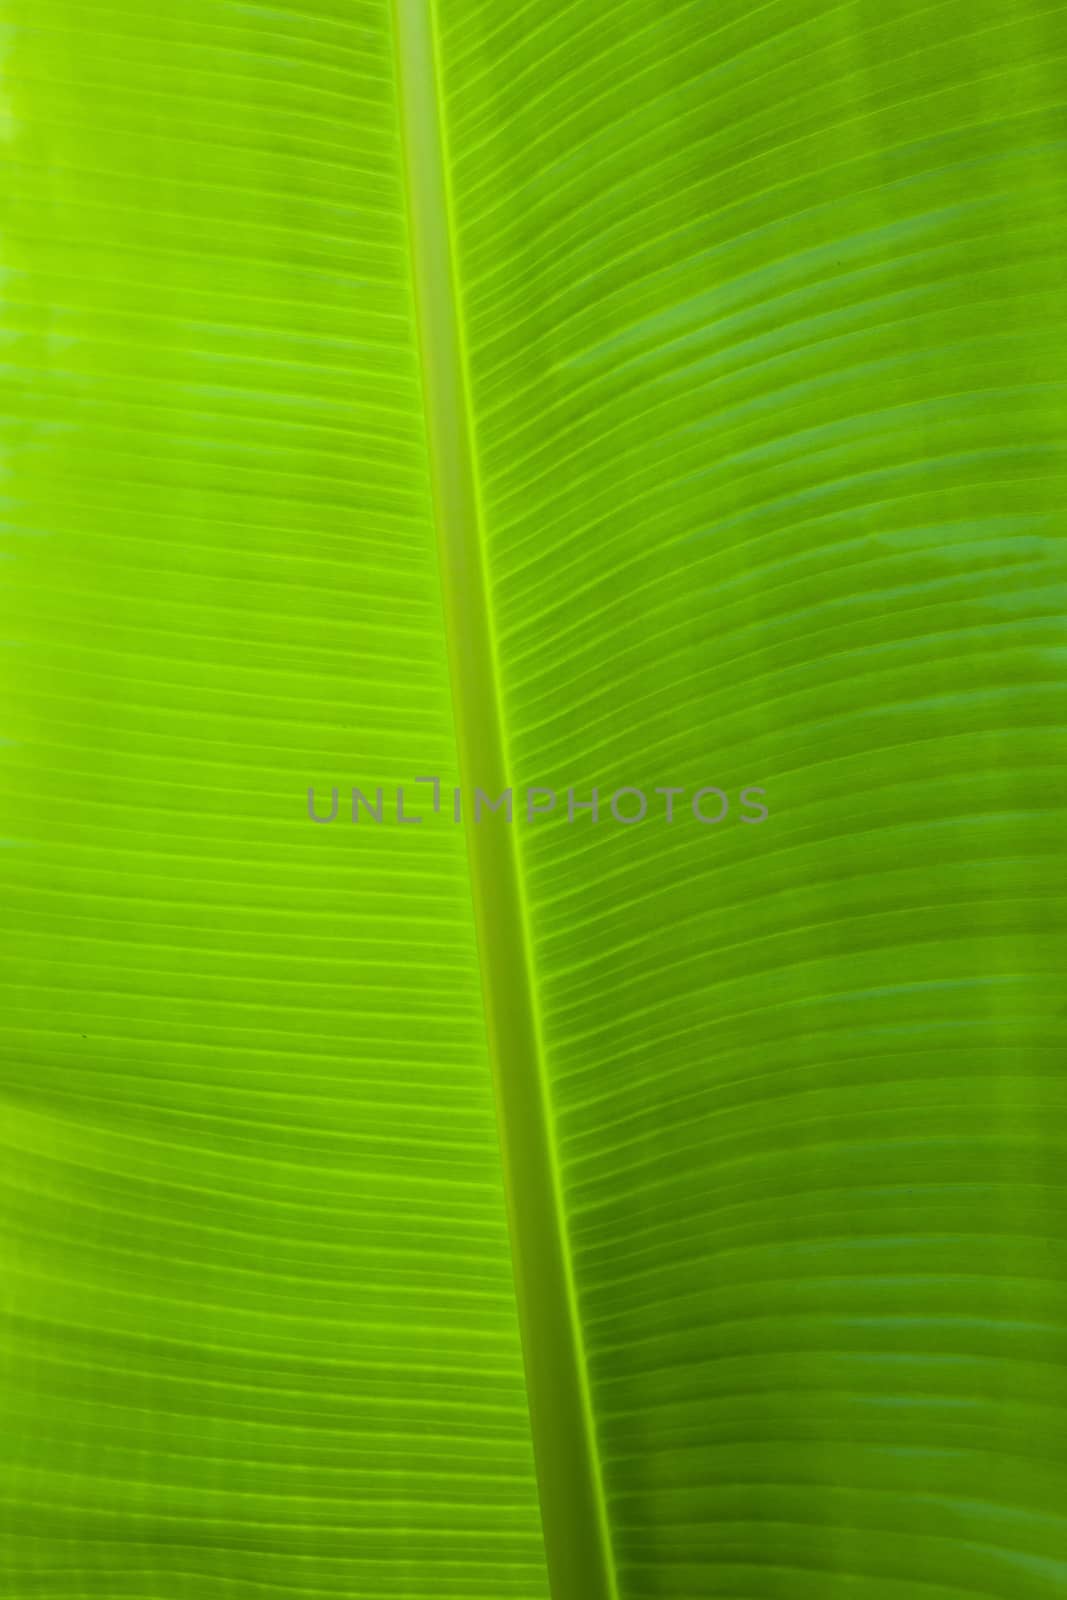 vertical photograph of green banana leaf